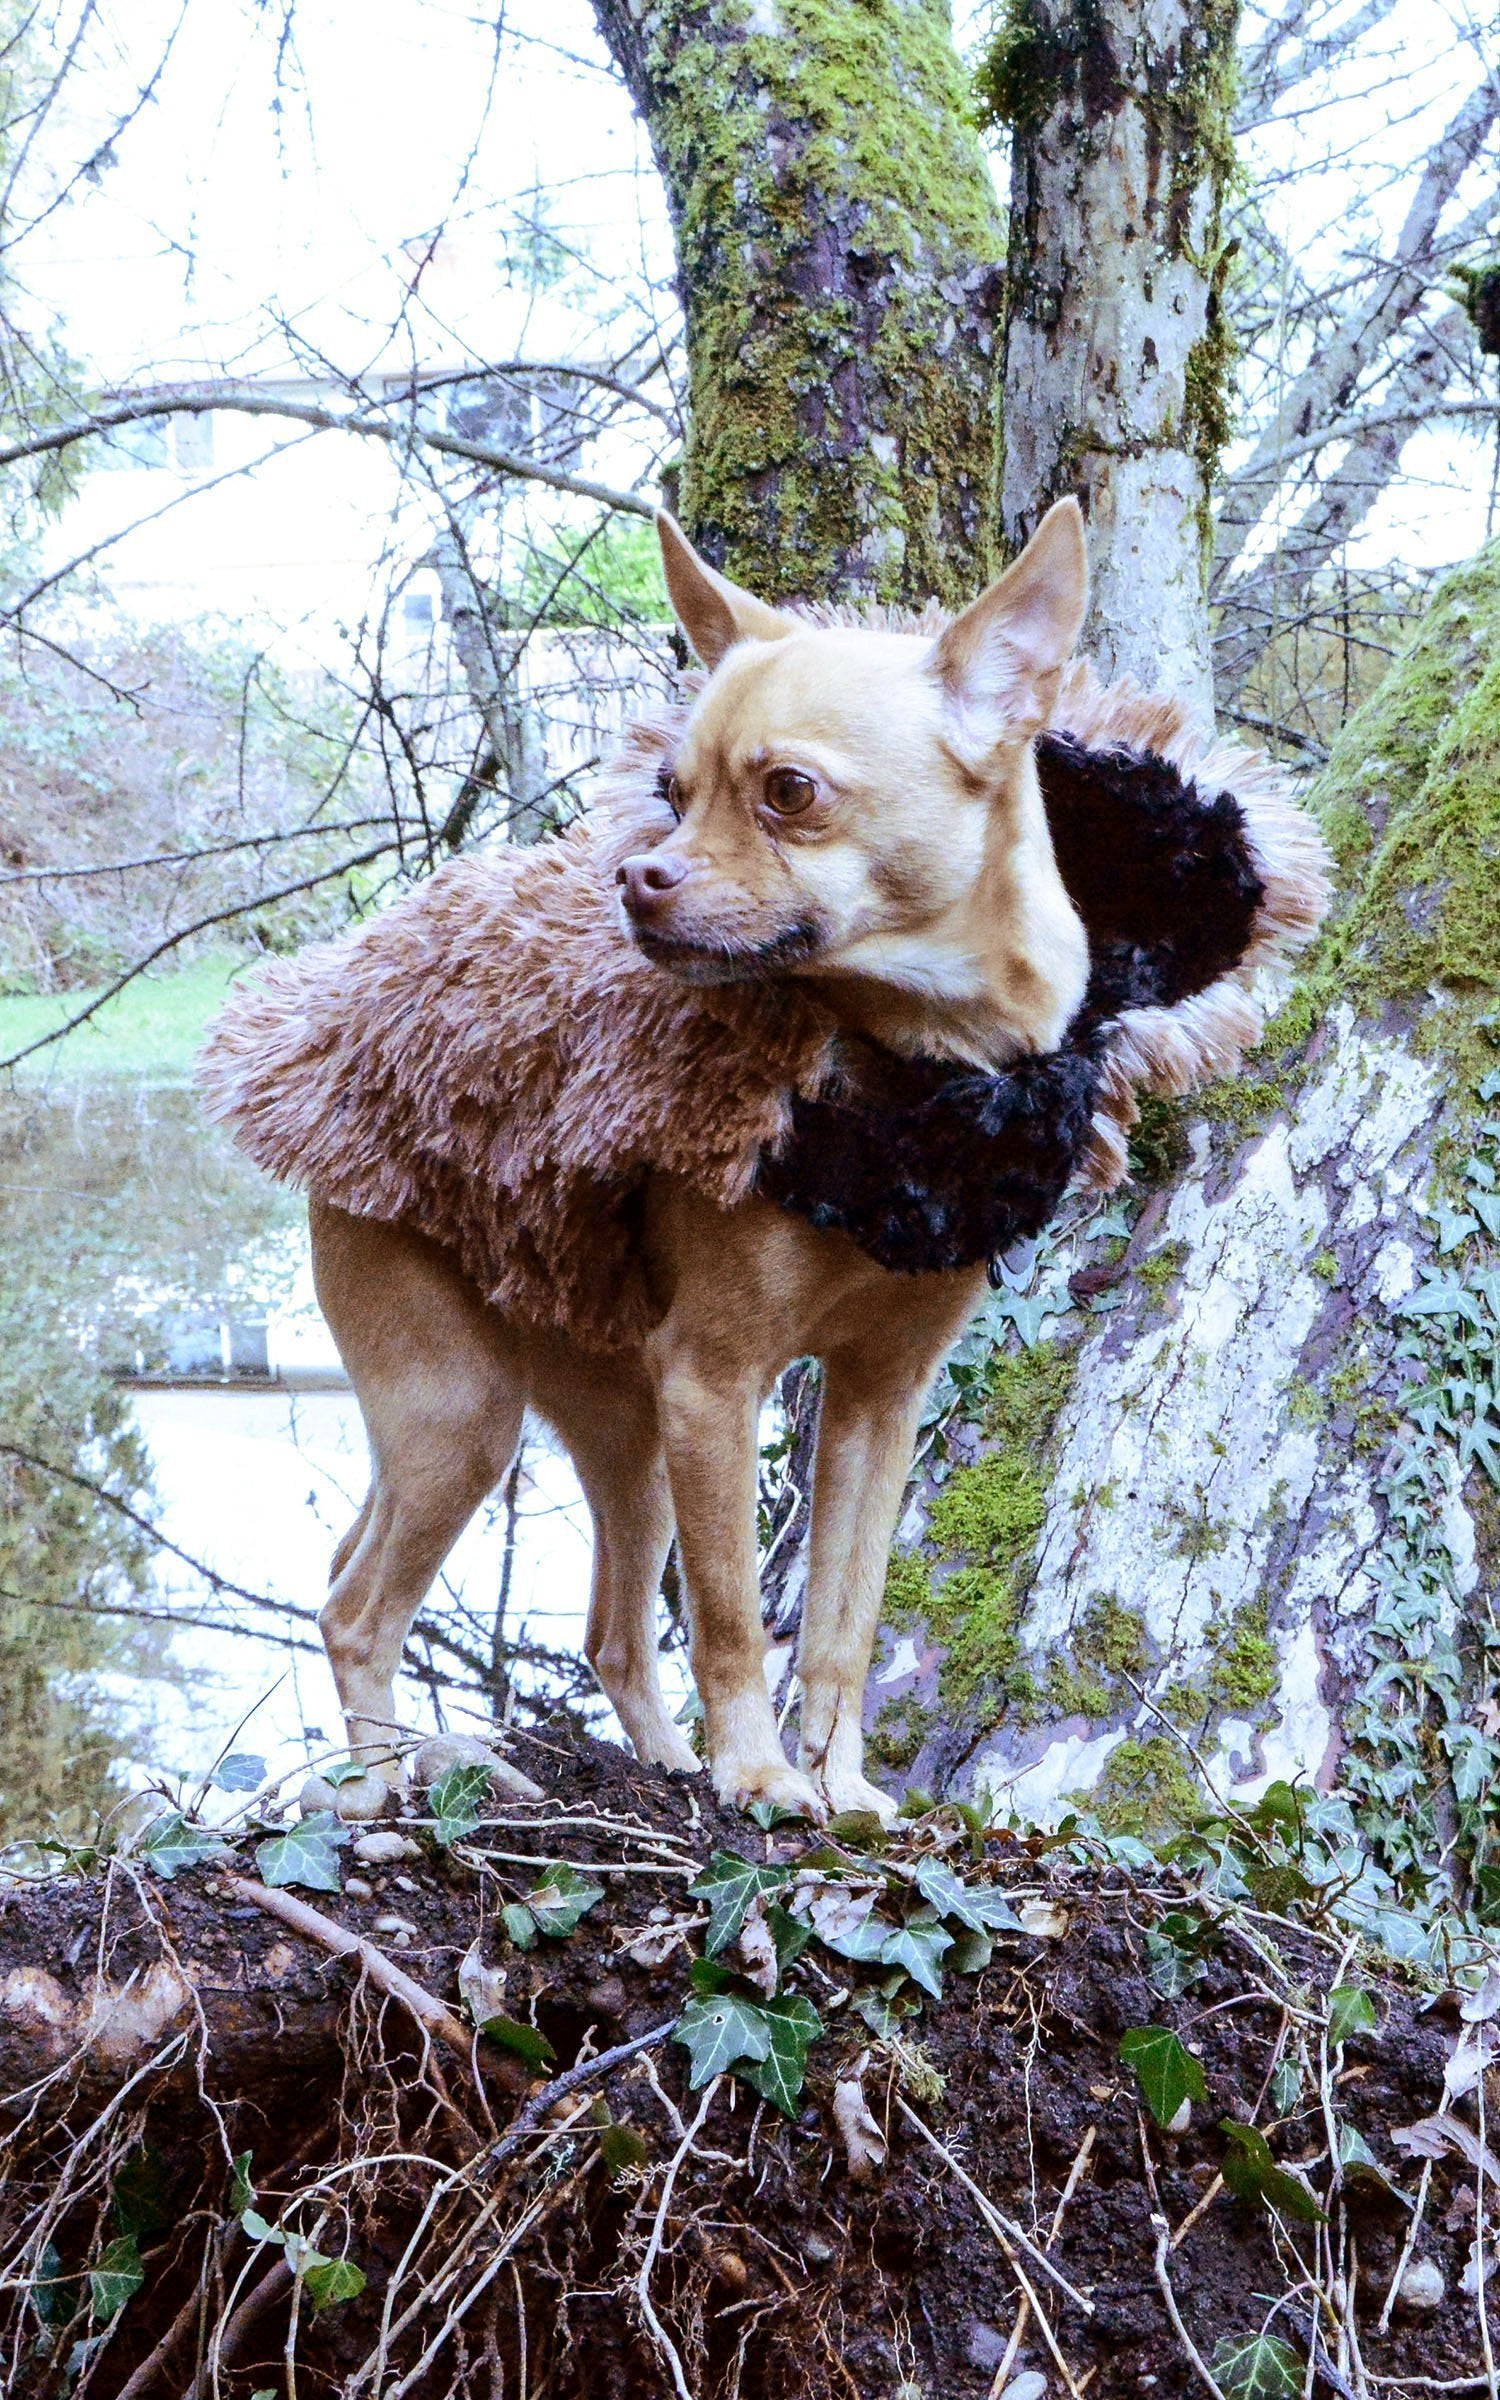 Designer Handmade reversible Dog Coat on Stuffed Dog front view | Red Fox Long hair  Luxury Faux Fur revers to black | Handmade by Pandemonium Millinery Seattle, WA USA